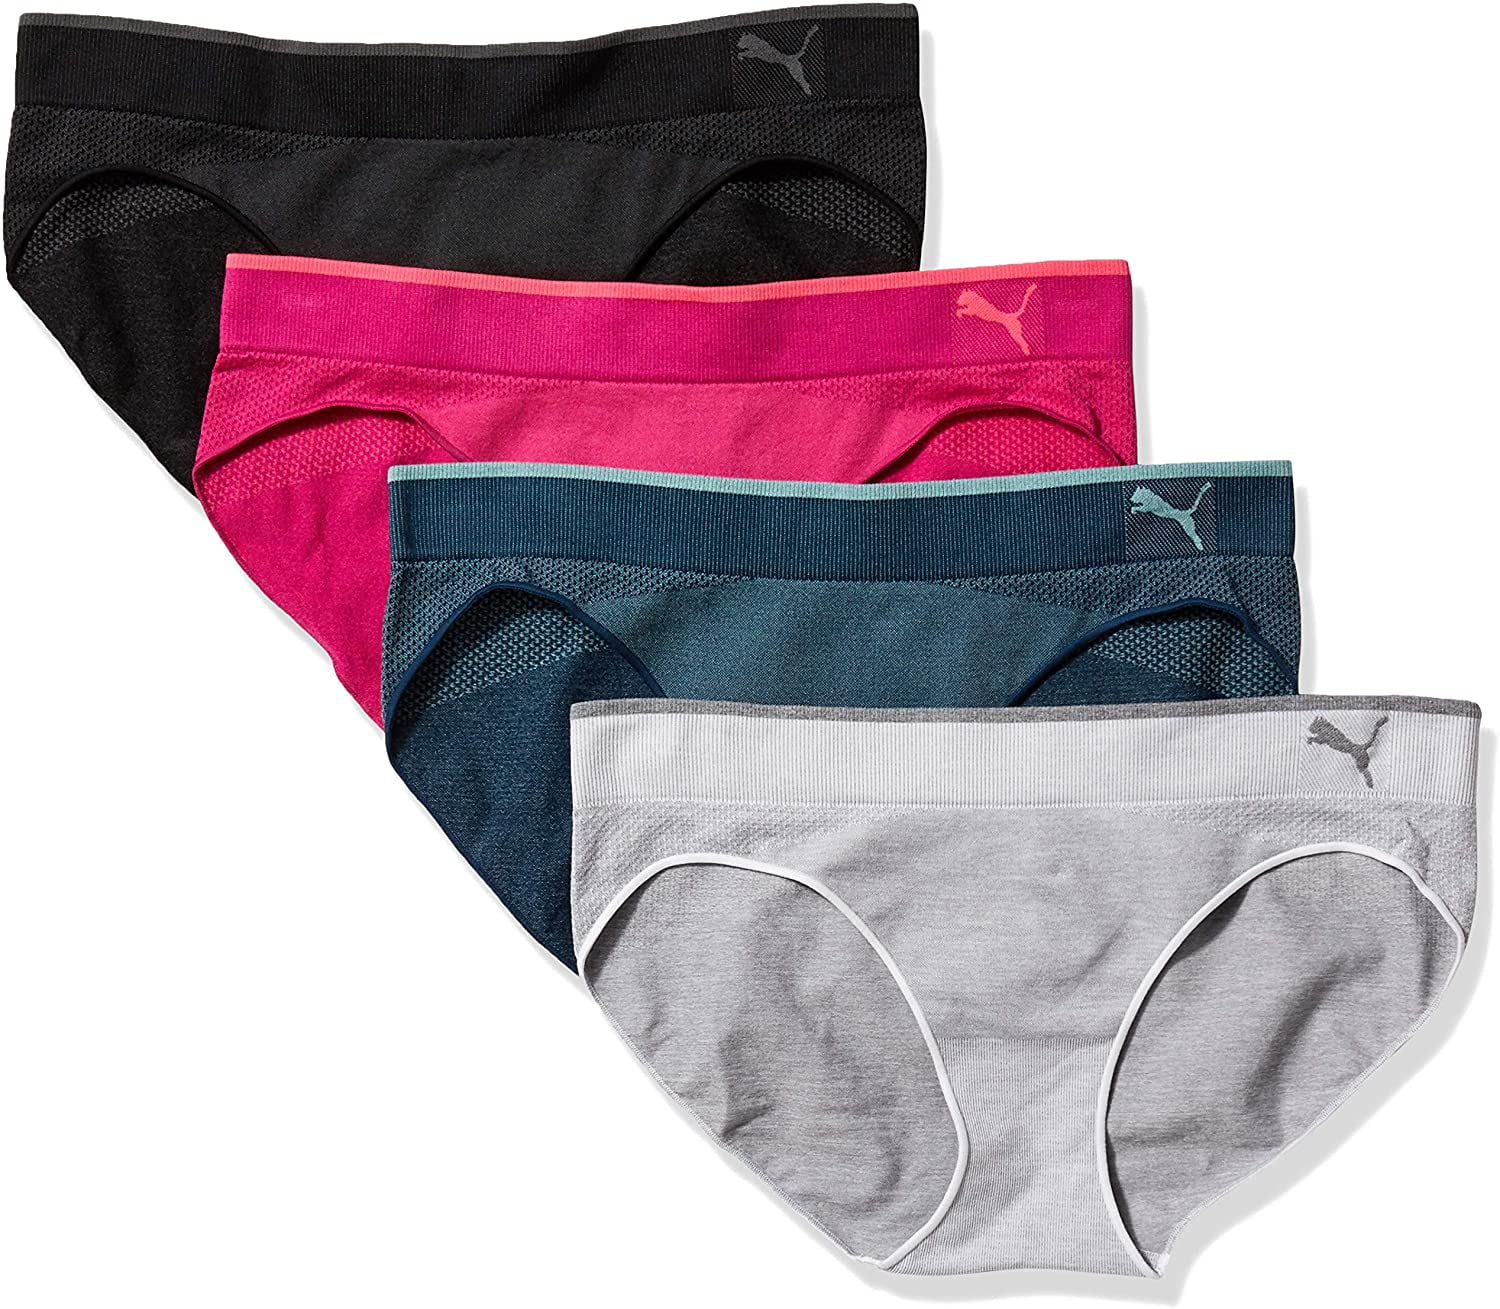 puma underwear womens